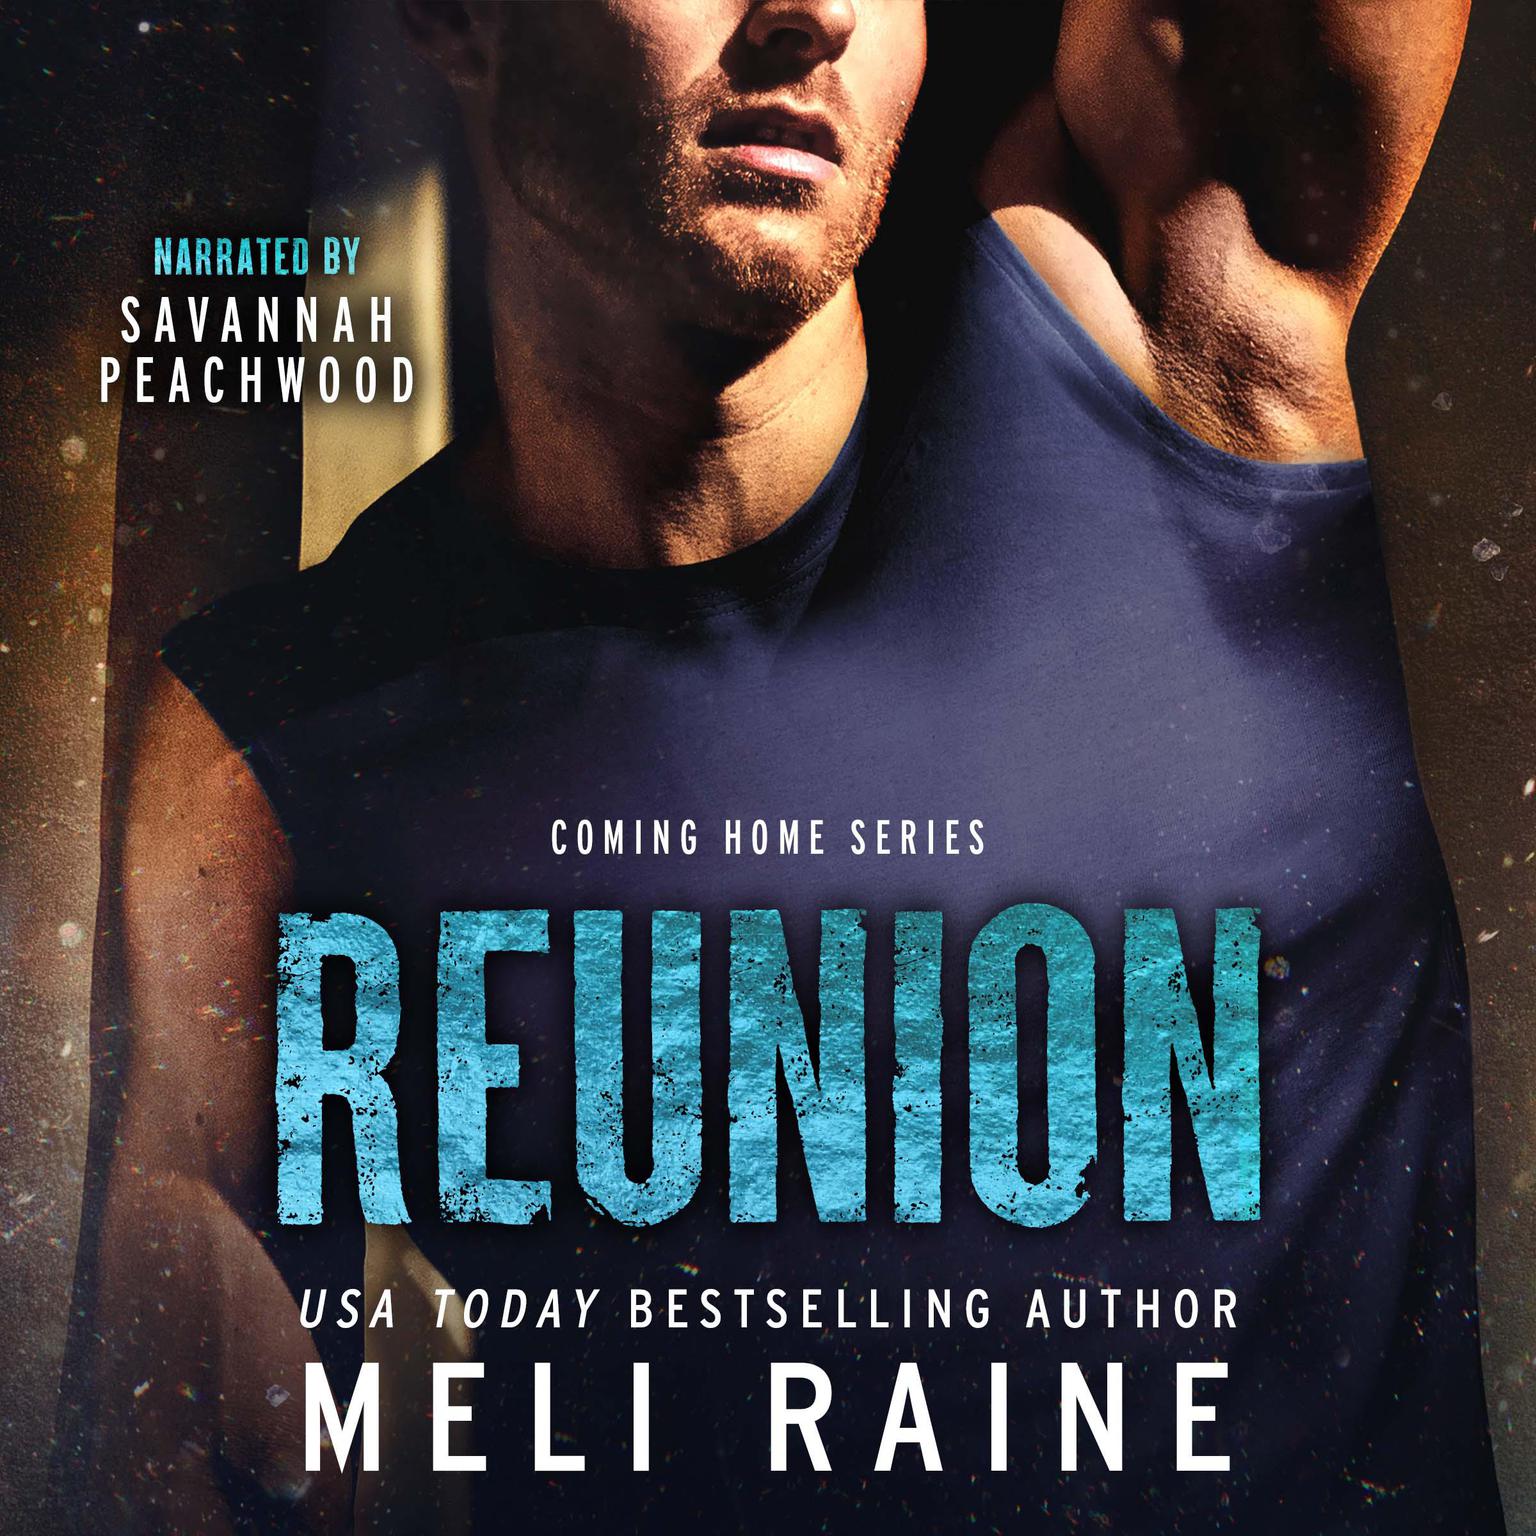 Reunion Audiobook, by Meli Raine